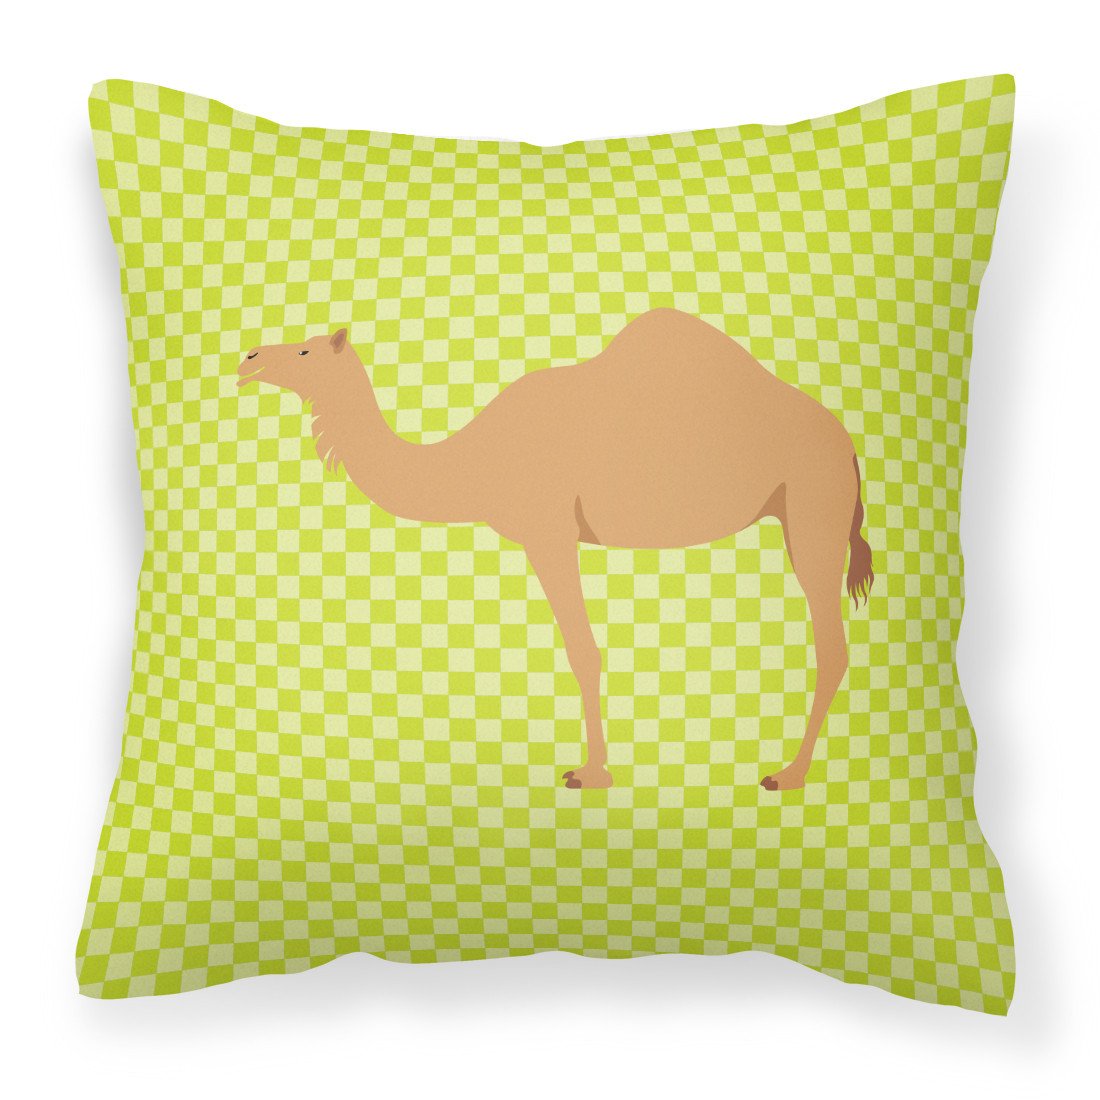 Arabian Camel Dromedary Green Fabric Decorative Pillow BB7643PW1818 by Caroline's Treasures